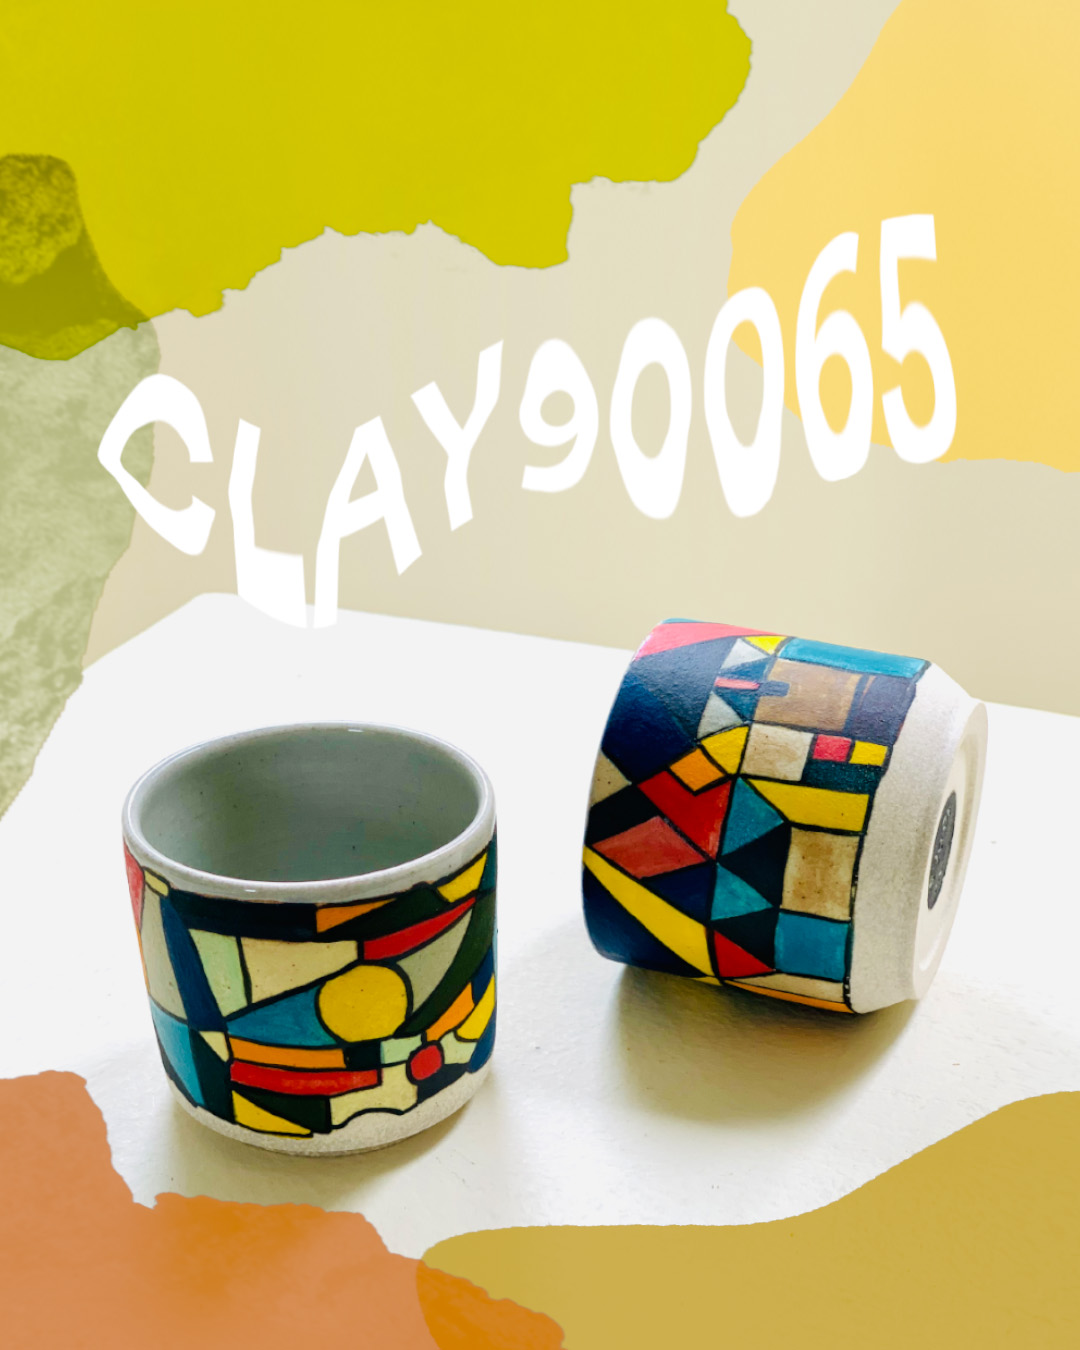 CLAY90065